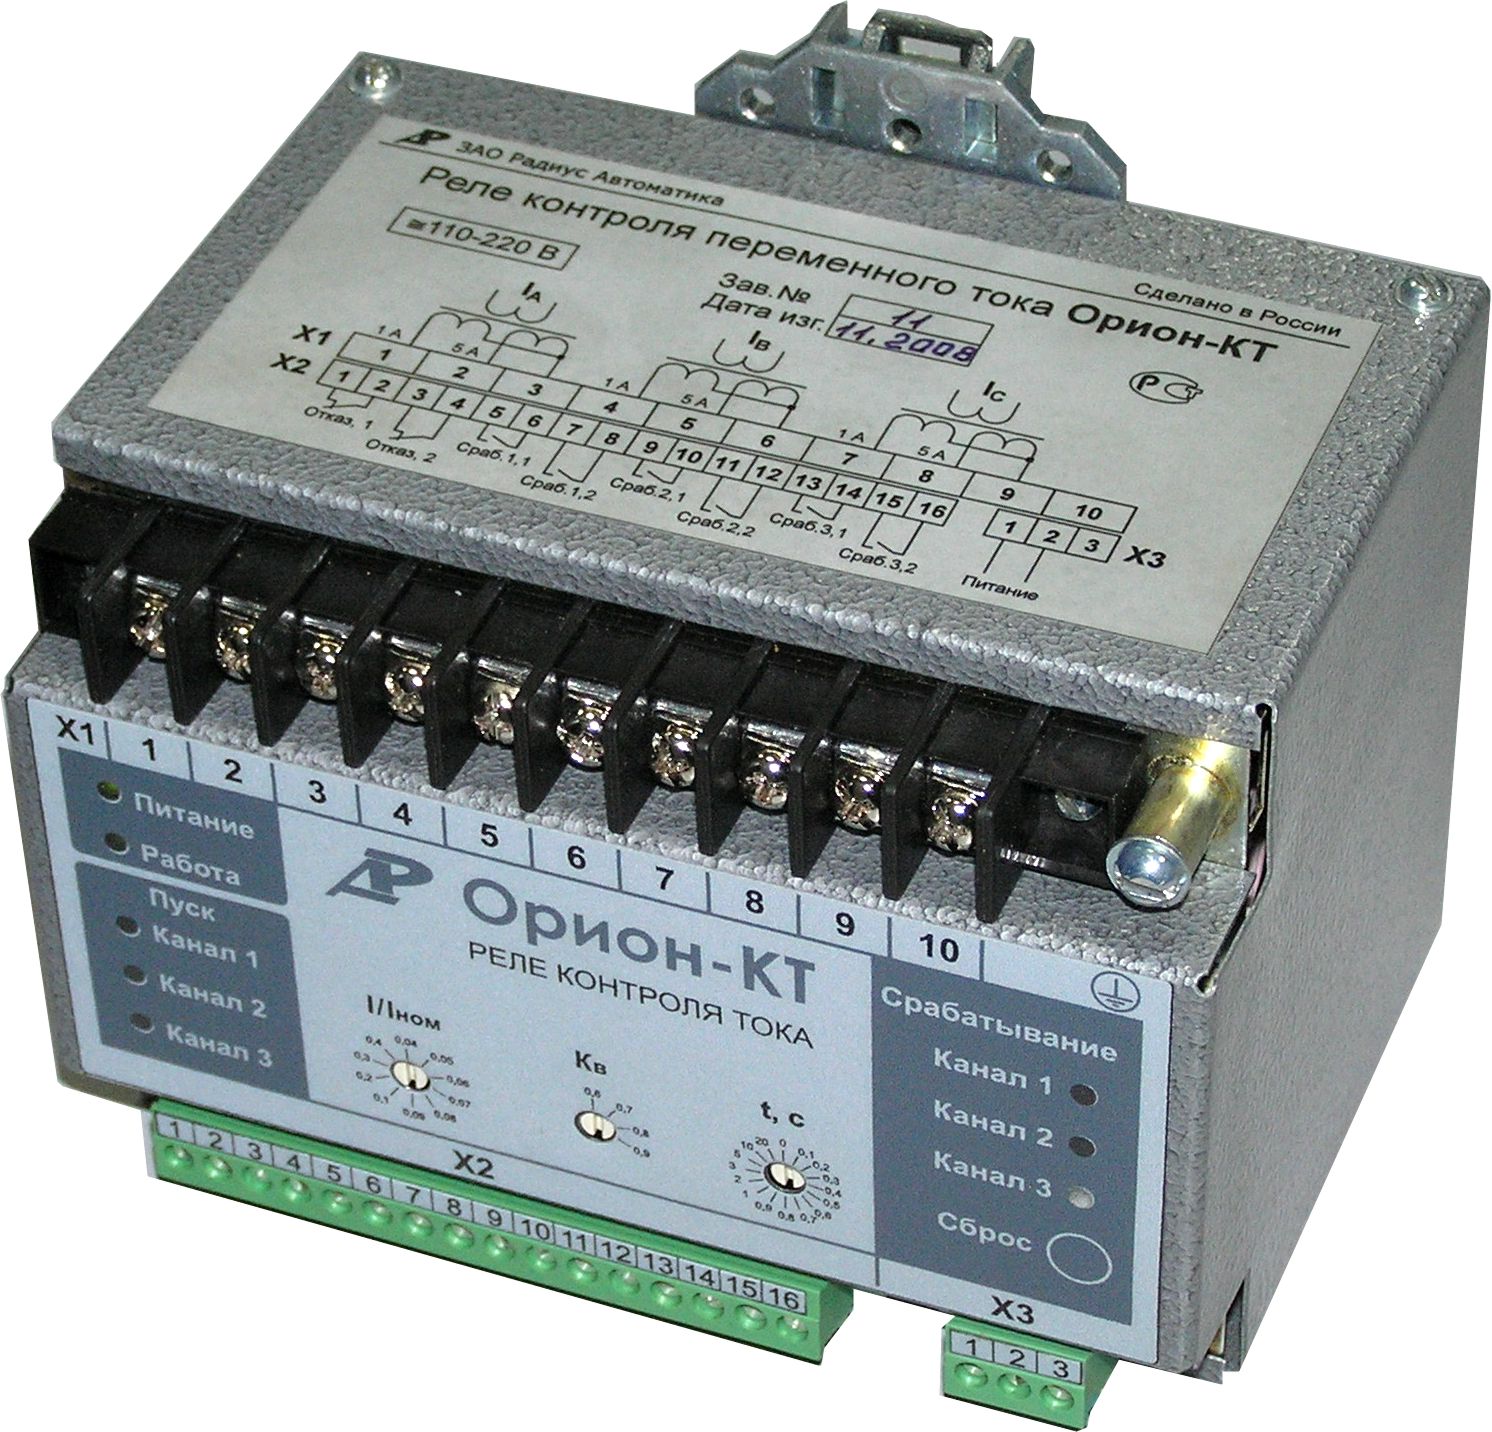 Орион-КТ - реле контроля переменного трехфазного тока